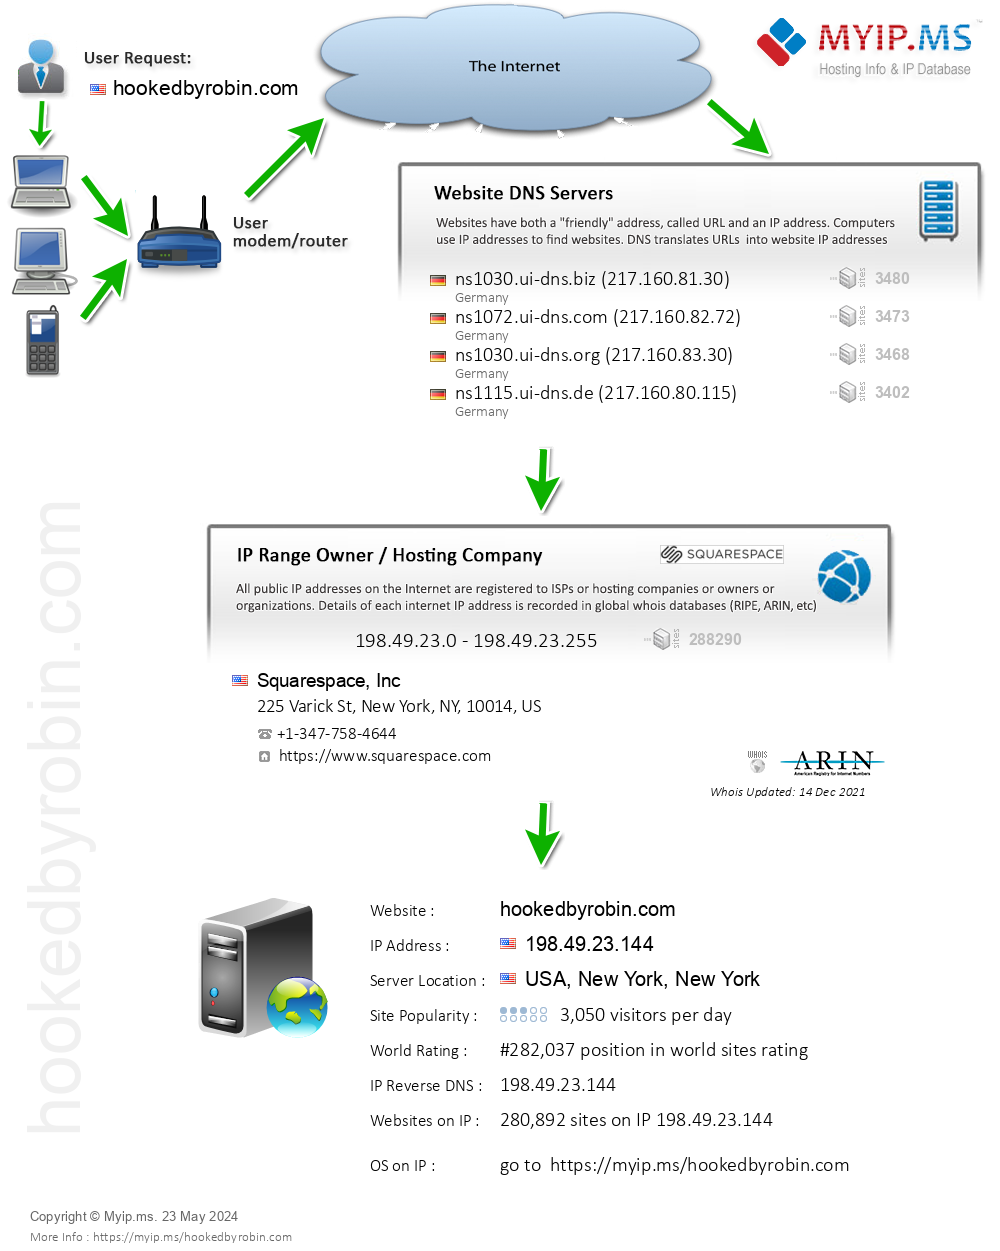 Hookedbyrobin.com - Website Hosting Visual IP Diagram